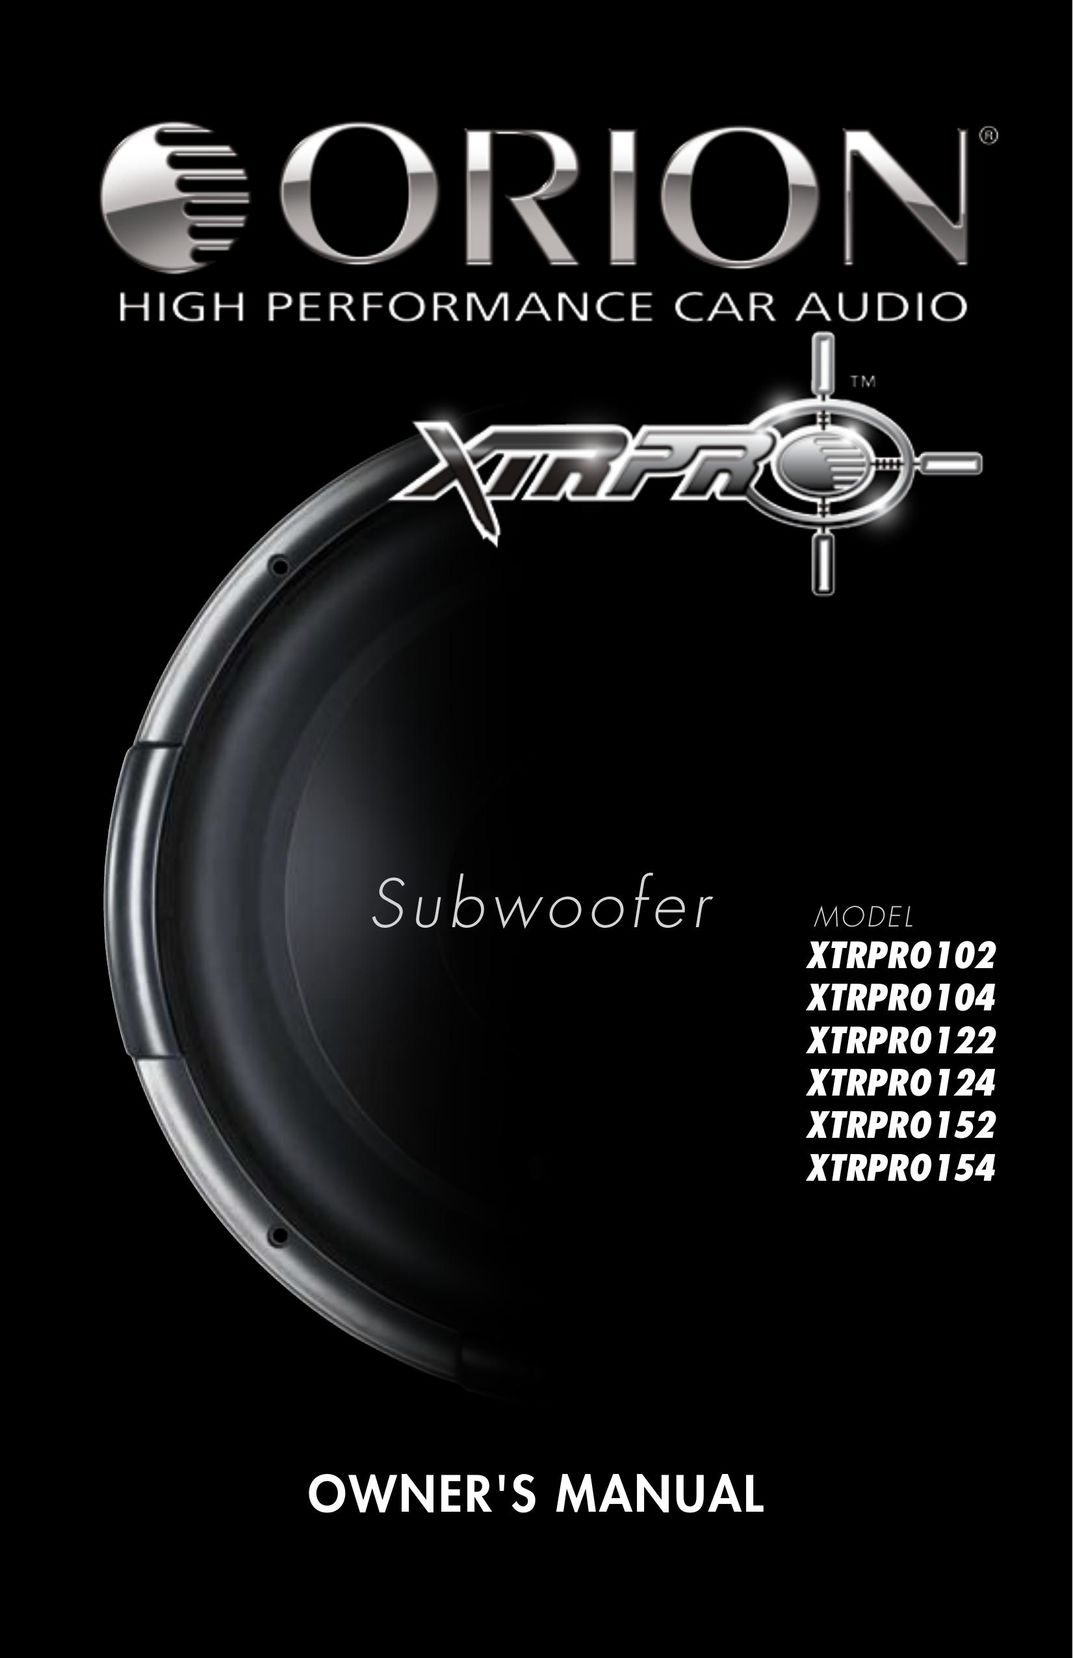 Orion Car Audio XTRPRO154 Speaker User Manual